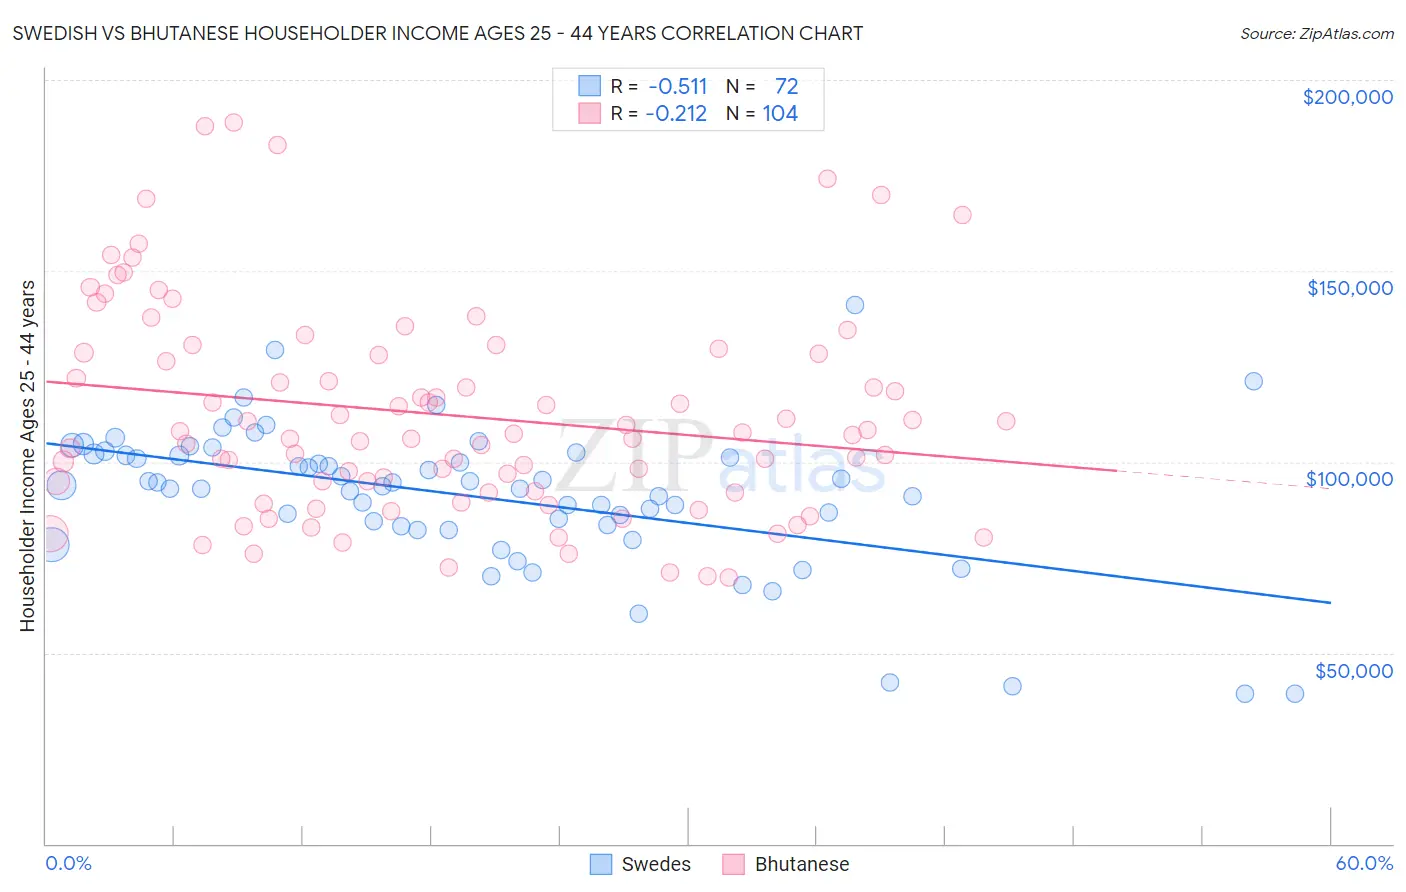 Swedish vs Bhutanese Householder Income Ages 25 - 44 years